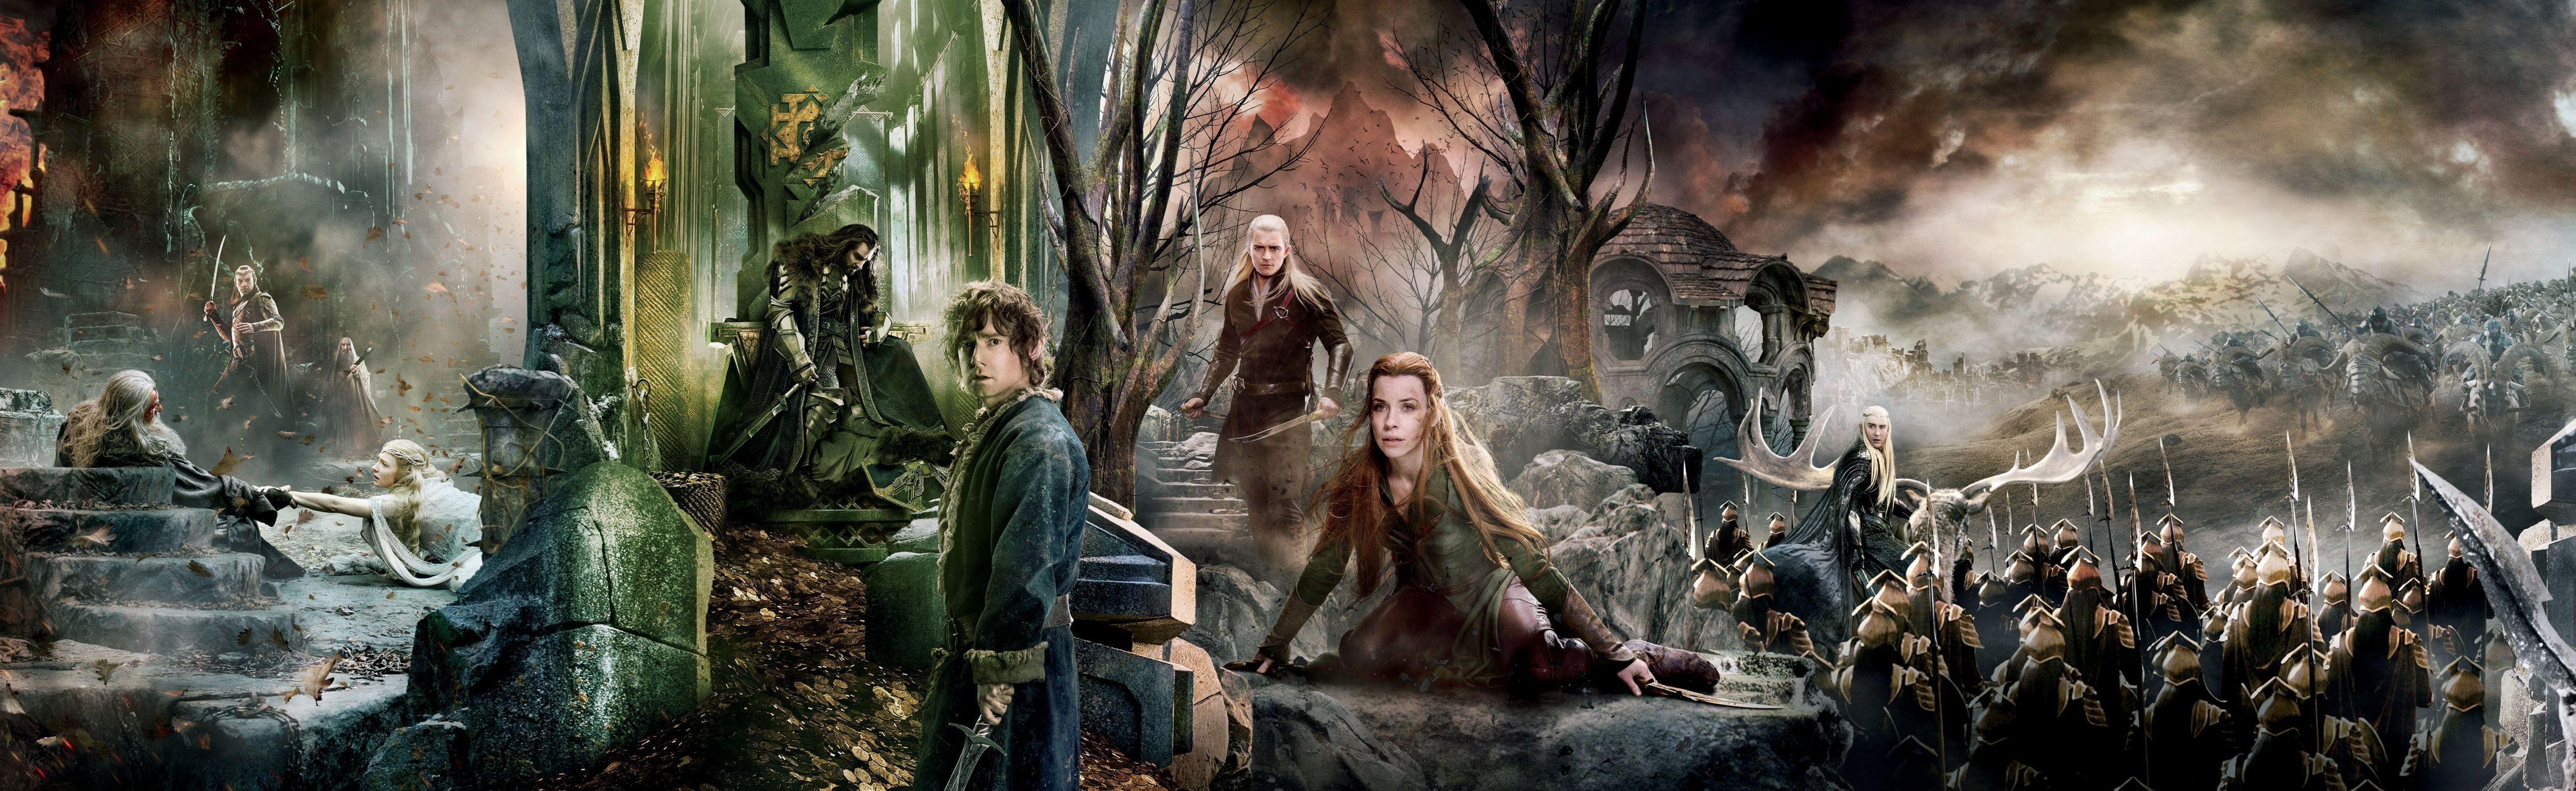 The Hobbit Trilogy Wallpaper  rTheHobbit